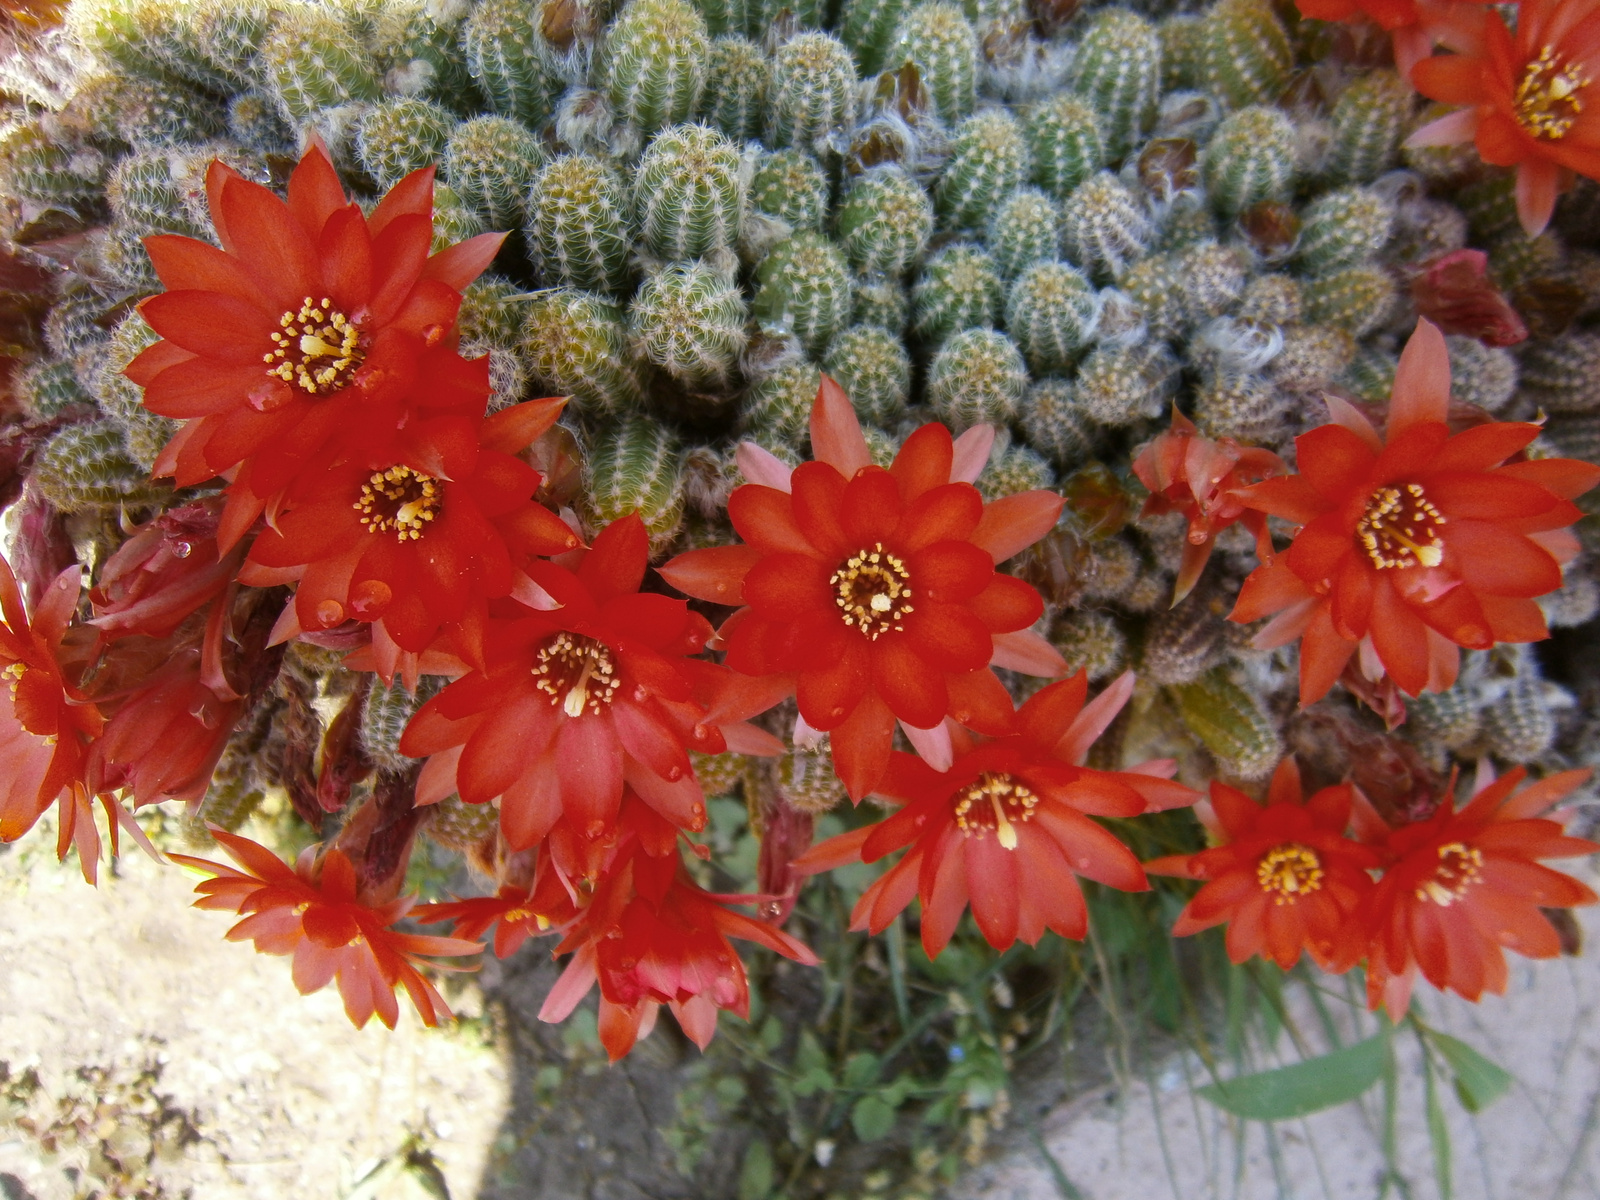 piros kis kaktusz-virágok